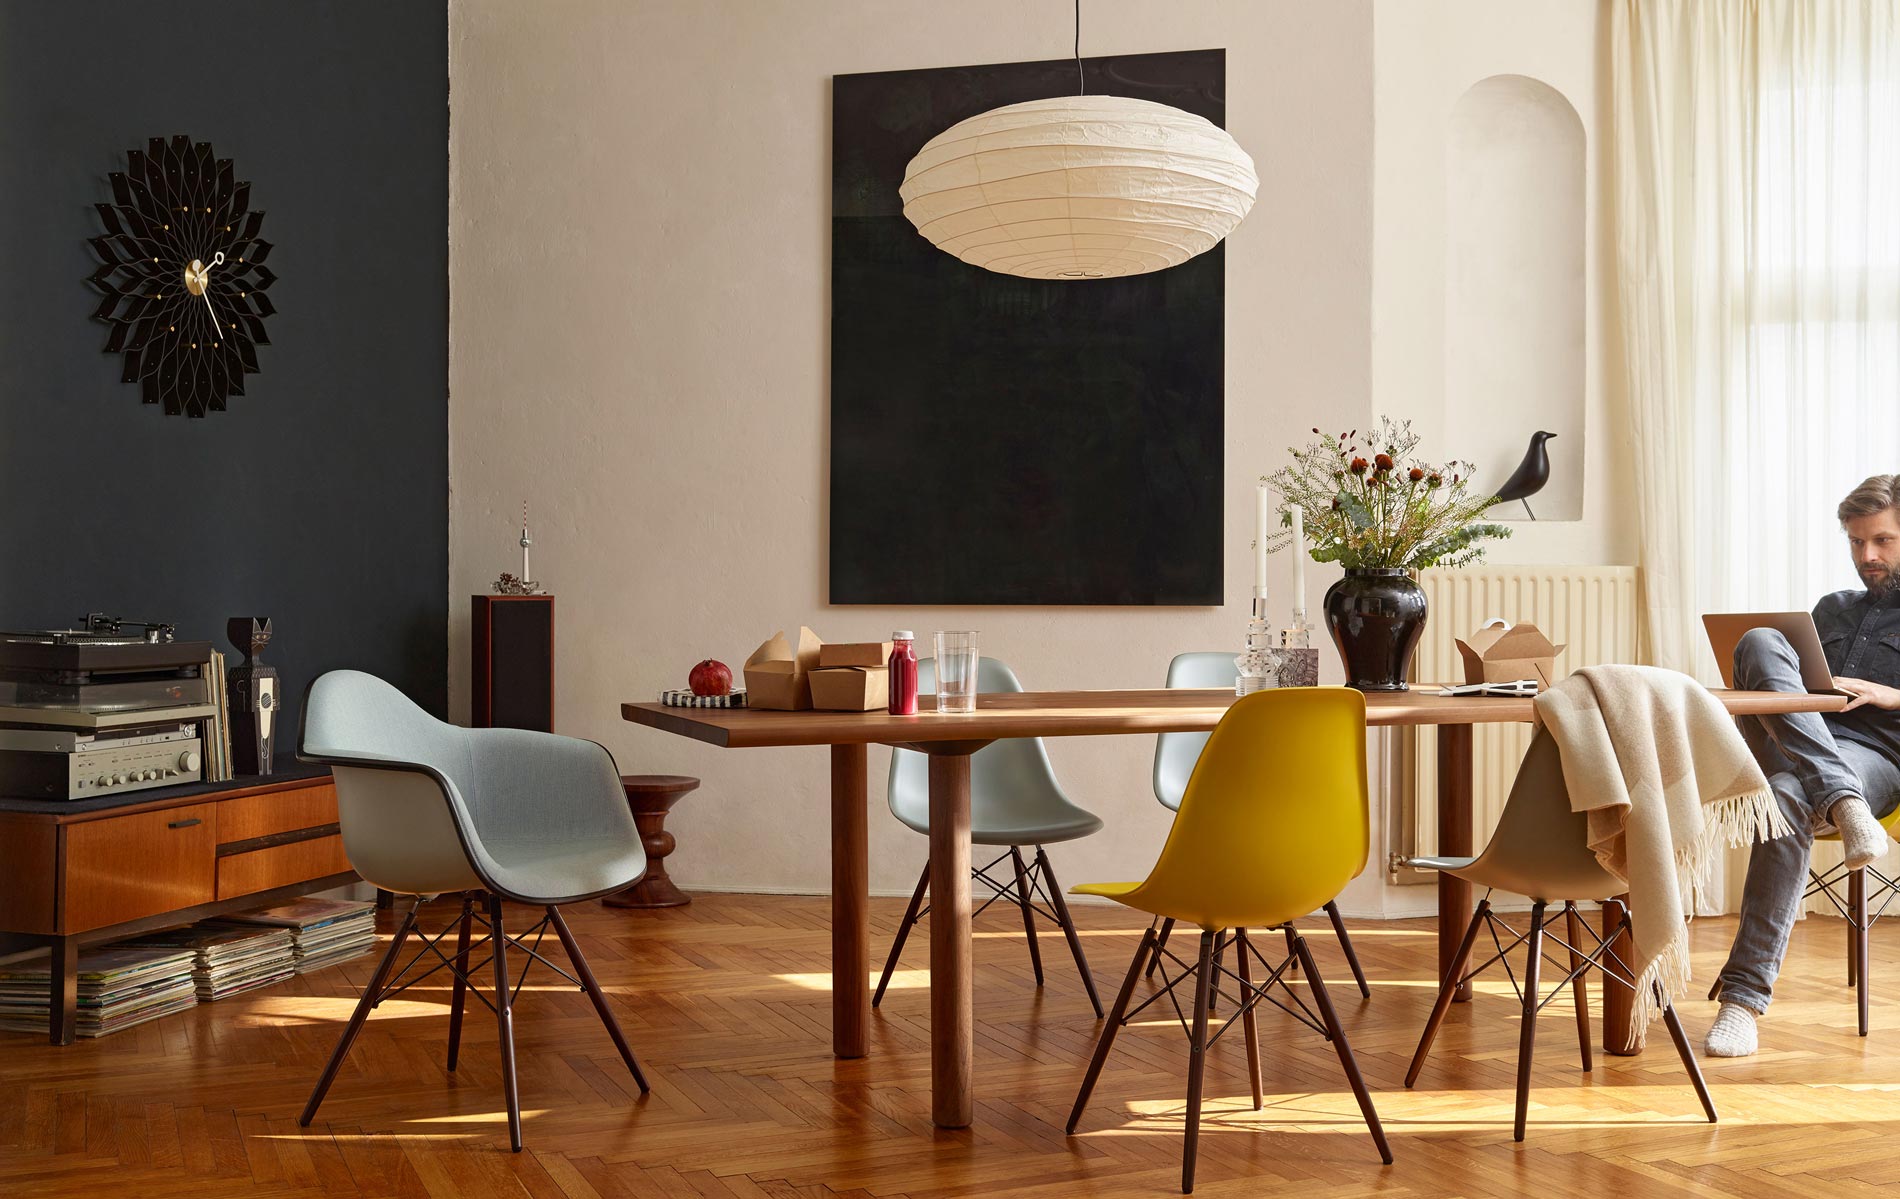 Vitra DAW - Eames Stuhl günstiger kaufen bei LIVINGforme.de